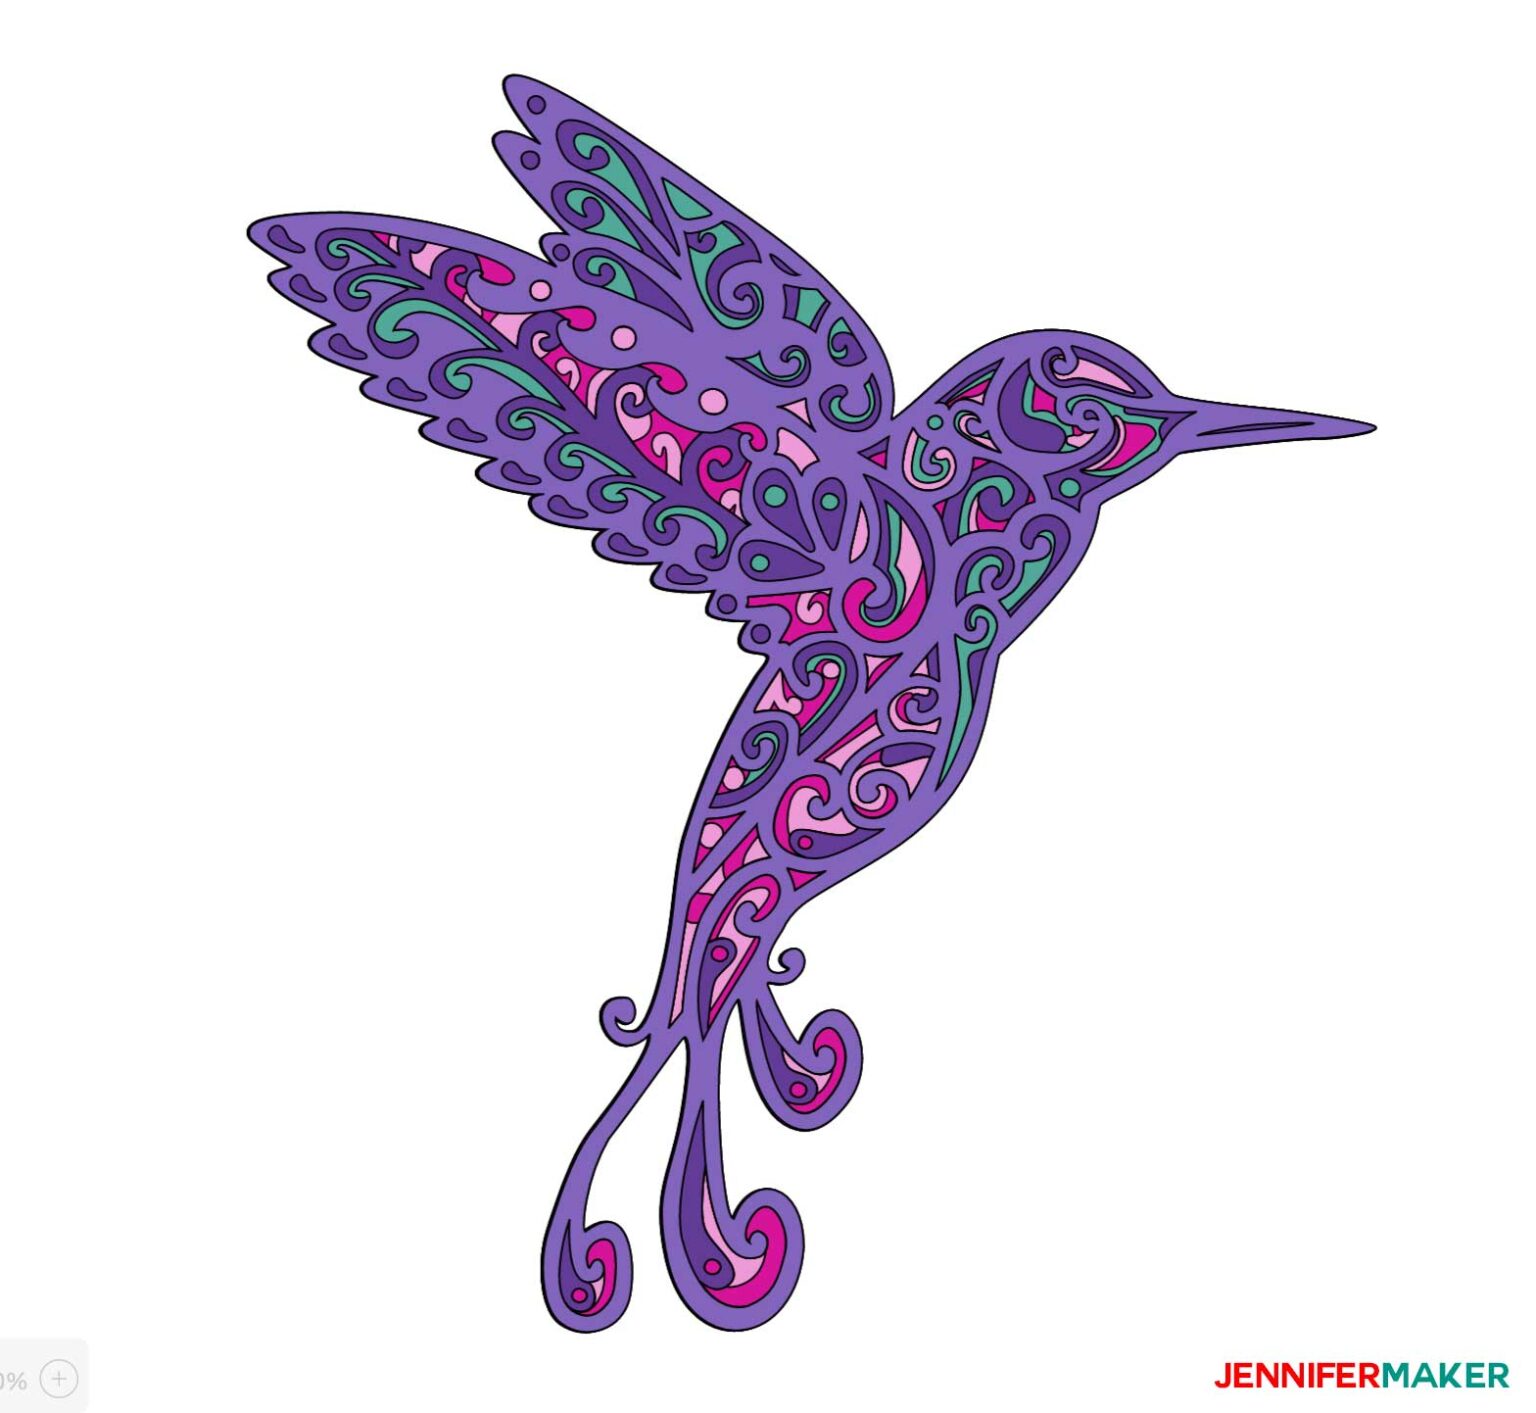 Download Hummingbird SVG: Make a 3D Layered Design With Your Cricut ...